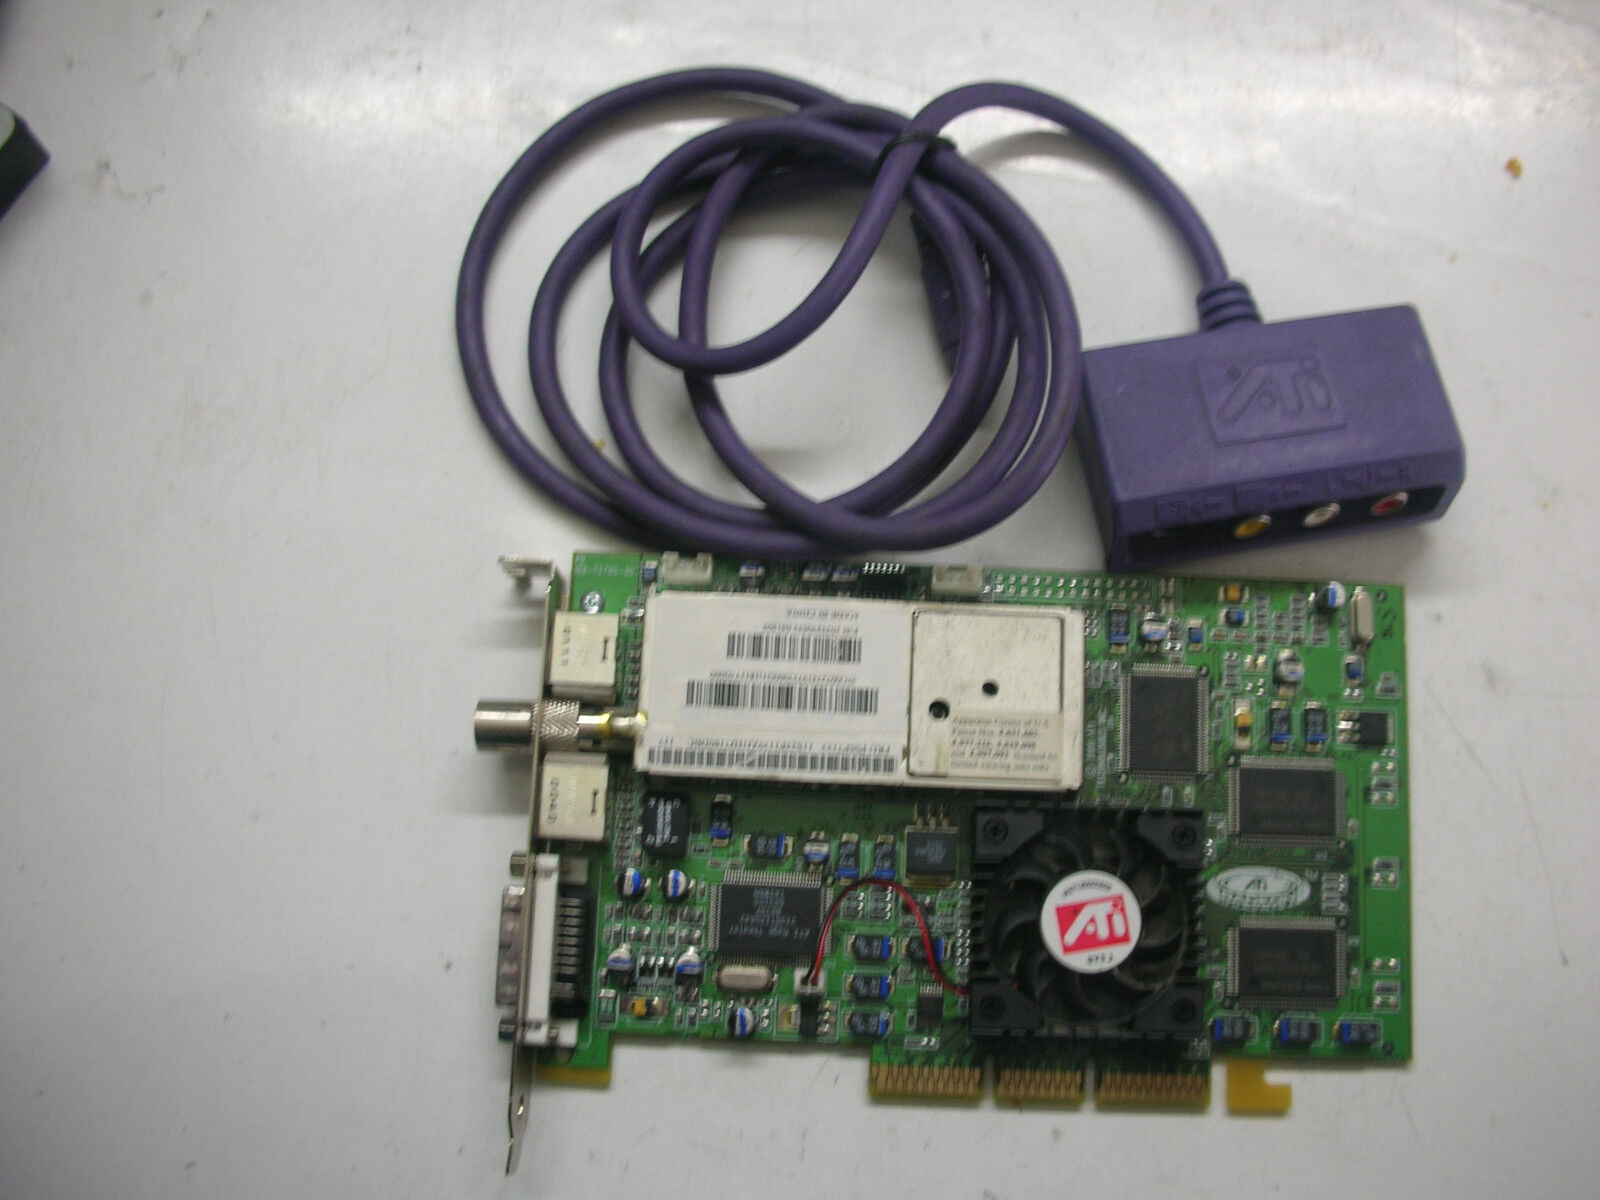 ATI Radeon Pn 109-73700-30 32mb AGP + Vid Adaptor